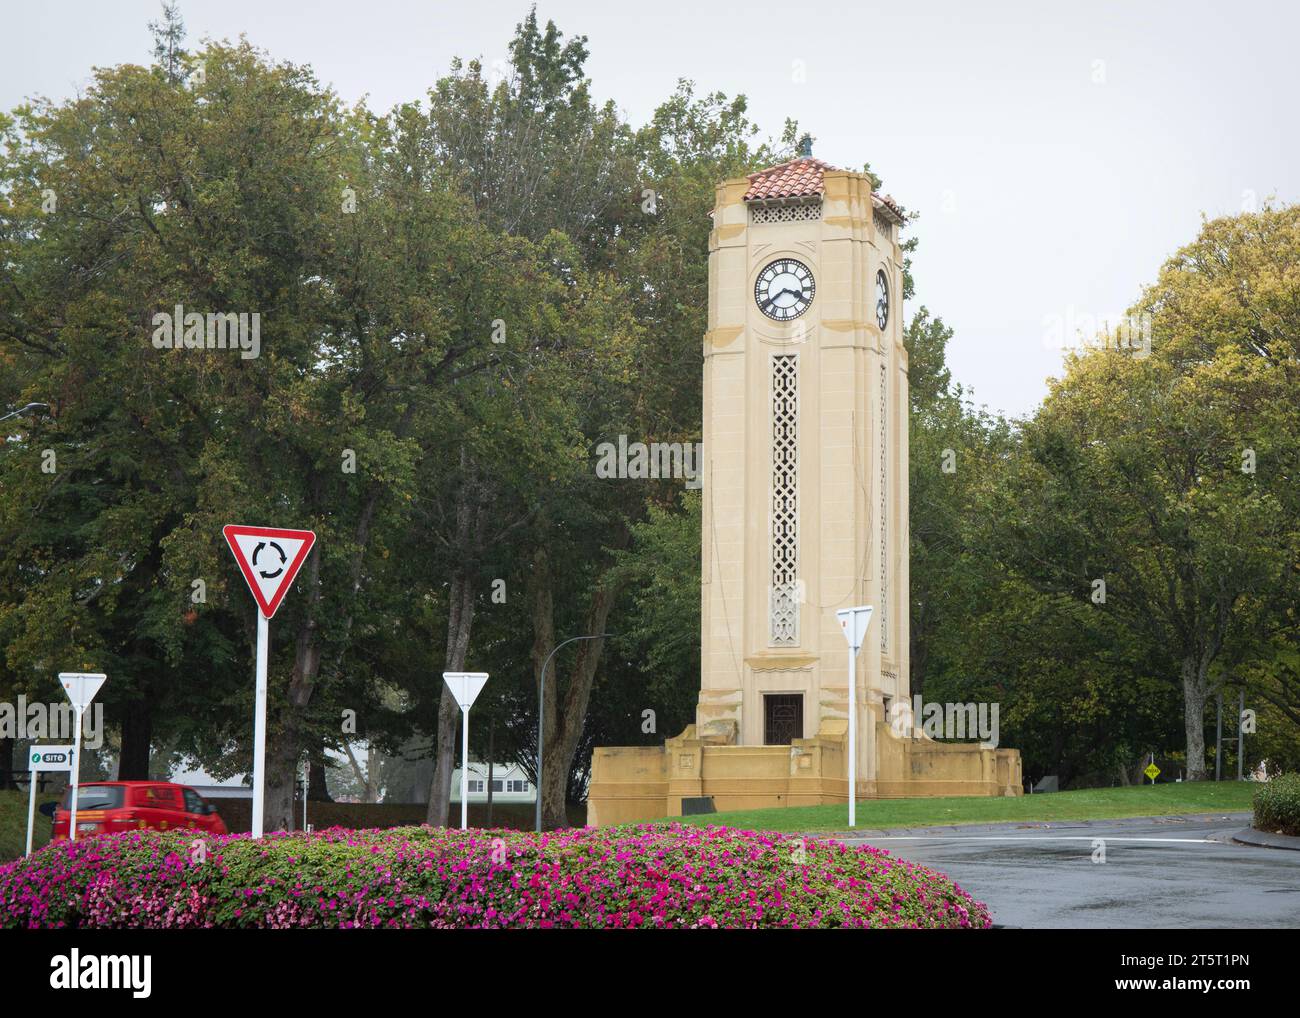 The historic Clock Tower in Cambridge, New Zealand Stock Photo